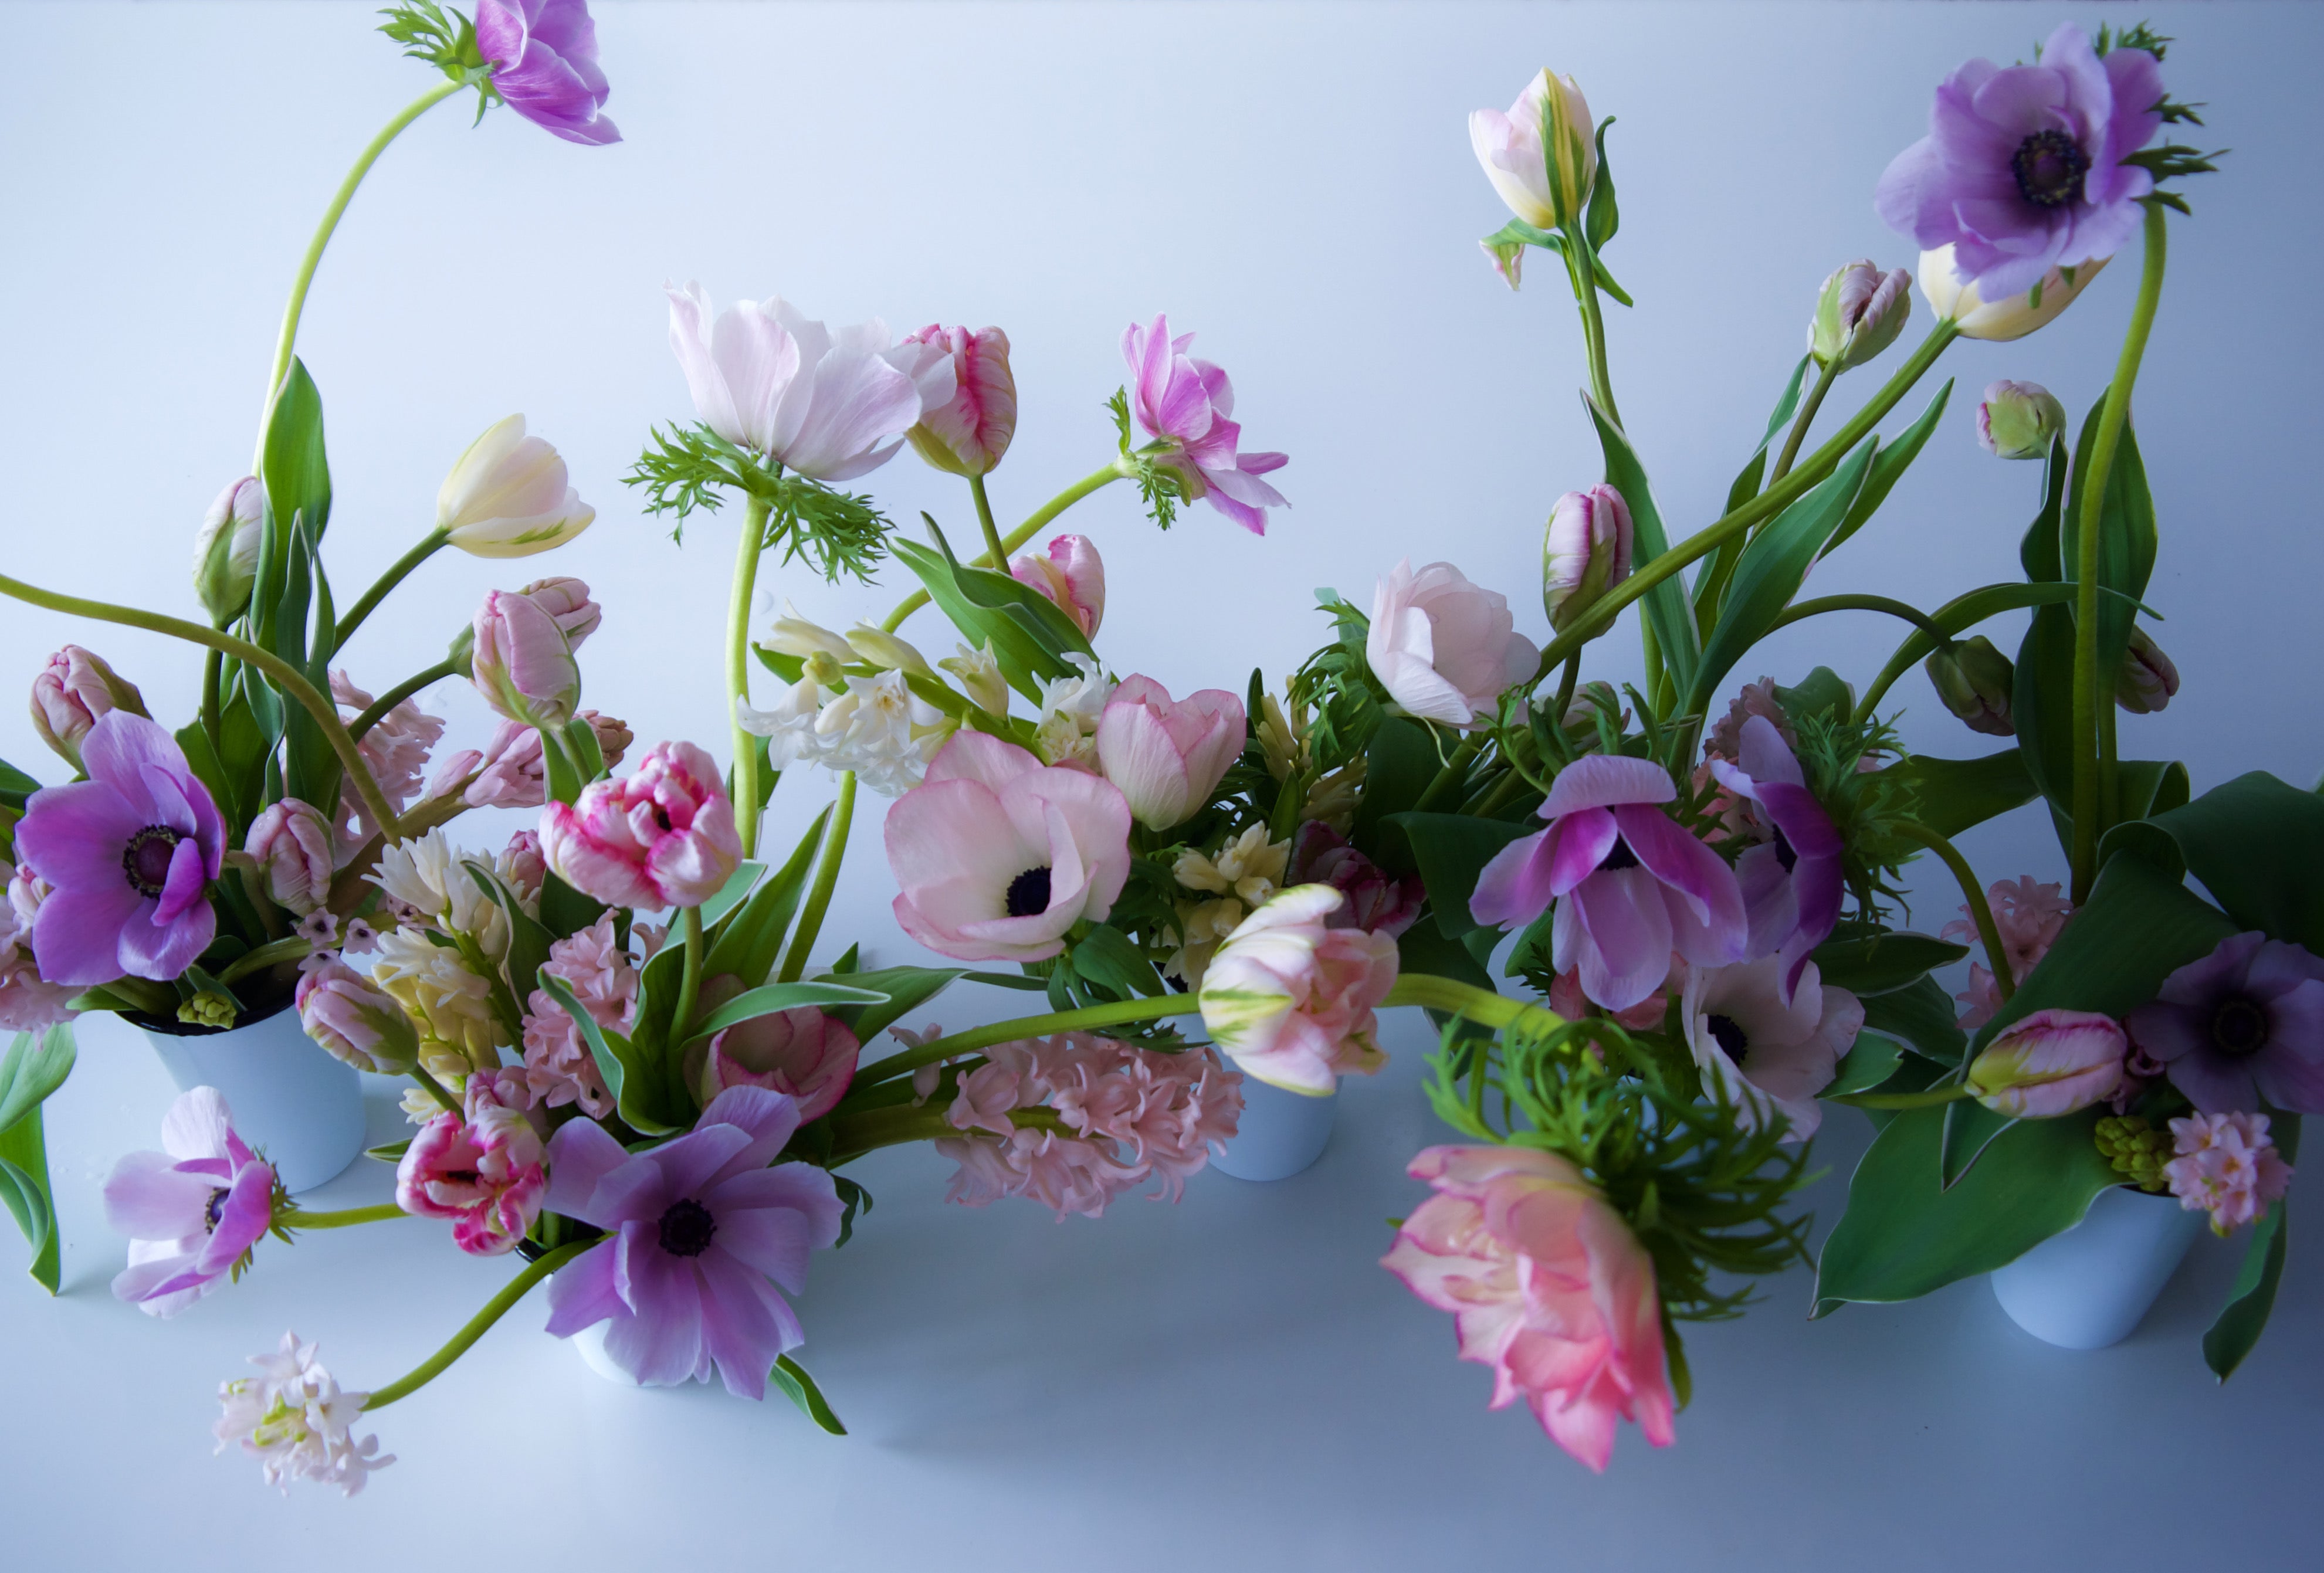 Send Easter flowers. Vancouver flower delivery. Portland flower delivery. 